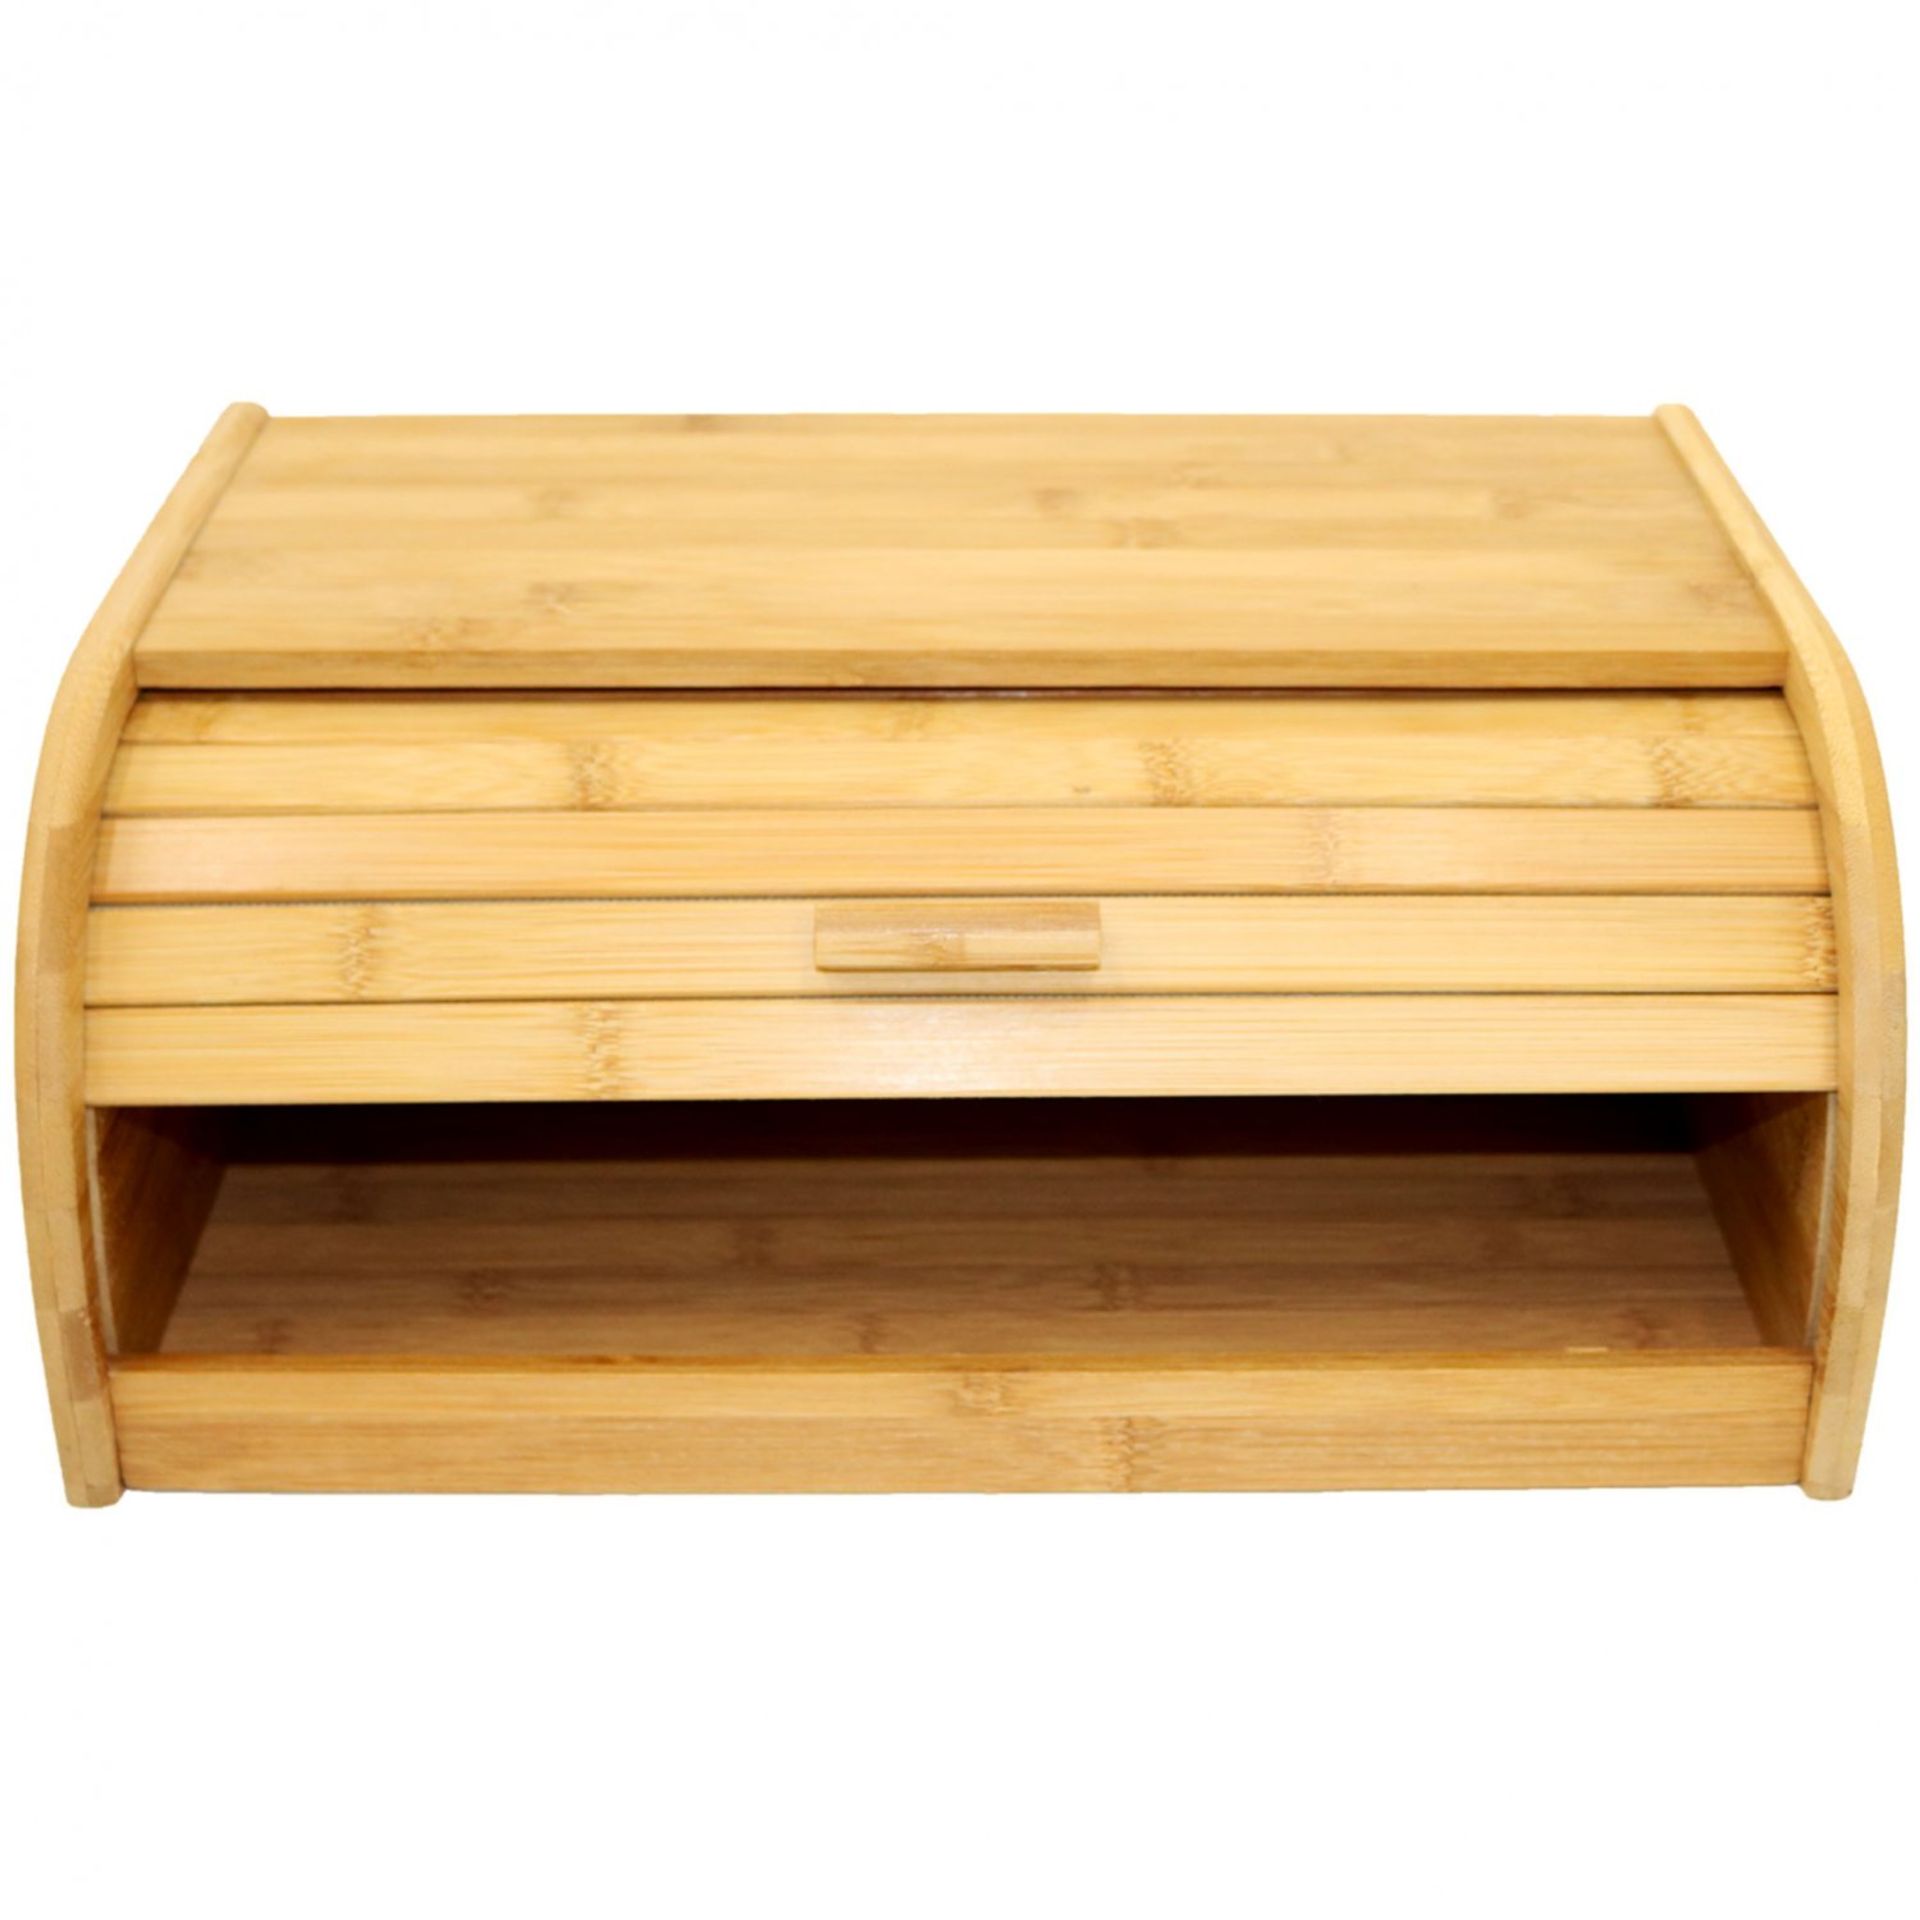 (TD97) Single Layer Roll Top Bamboo Wooden Bread Bin Kitchen Storage The wooden bread bin ... - Image 2 of 2